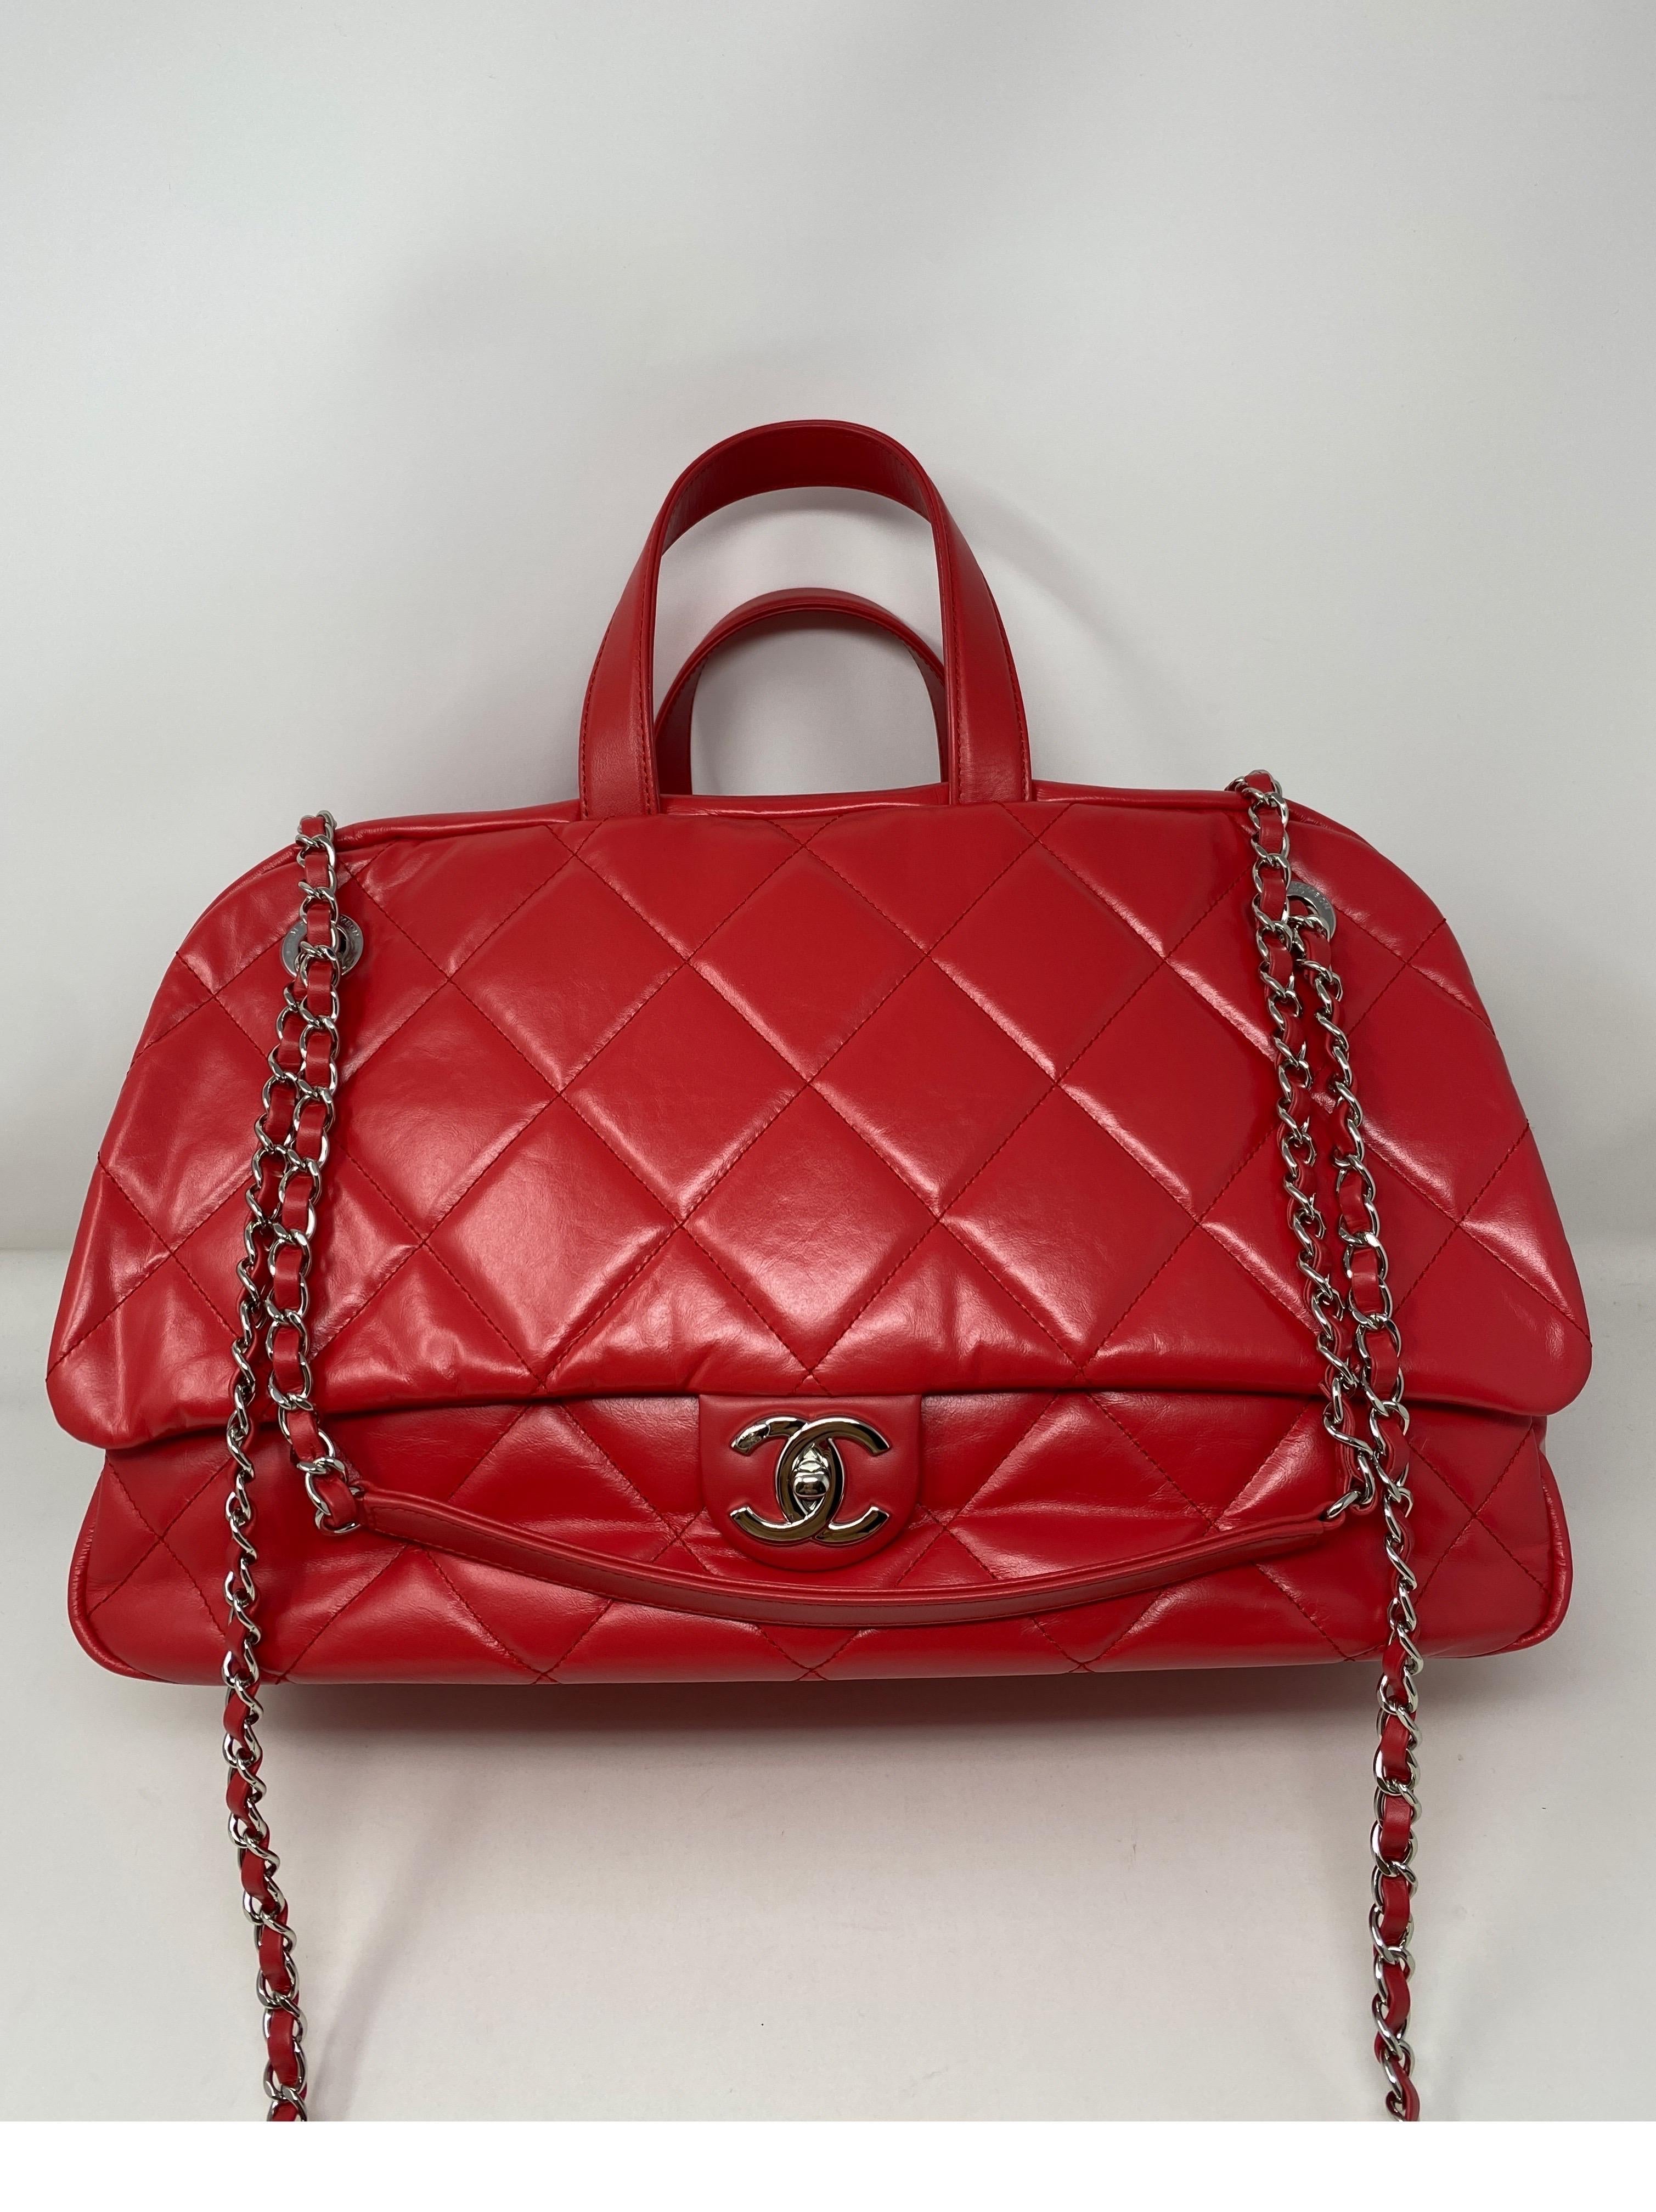 Chanel Large Red Bowler Bag  13